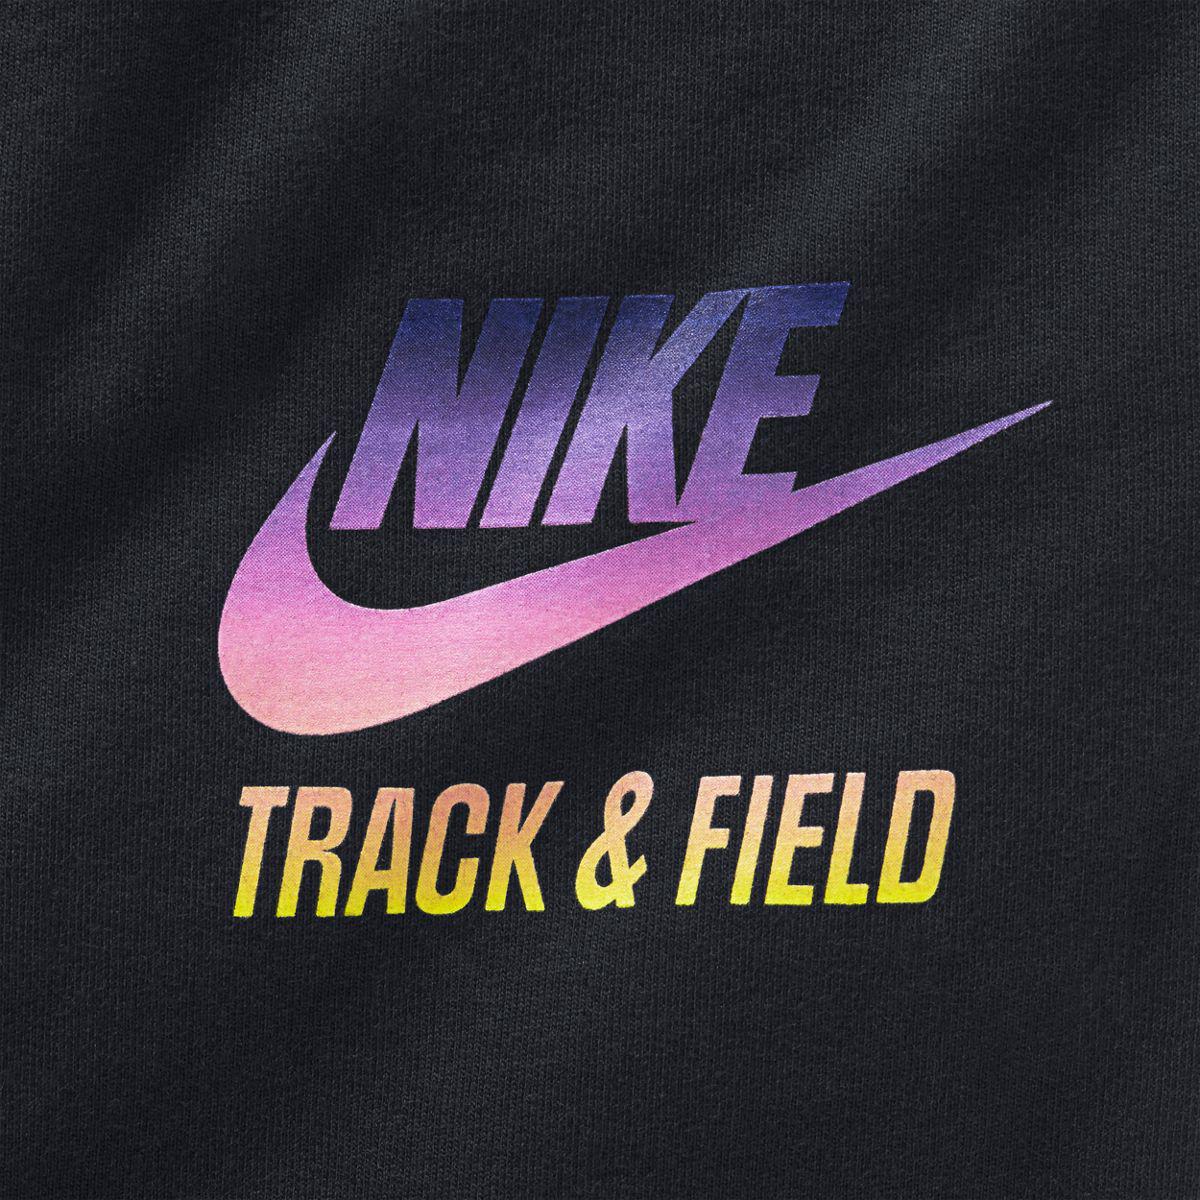 Nike tracking